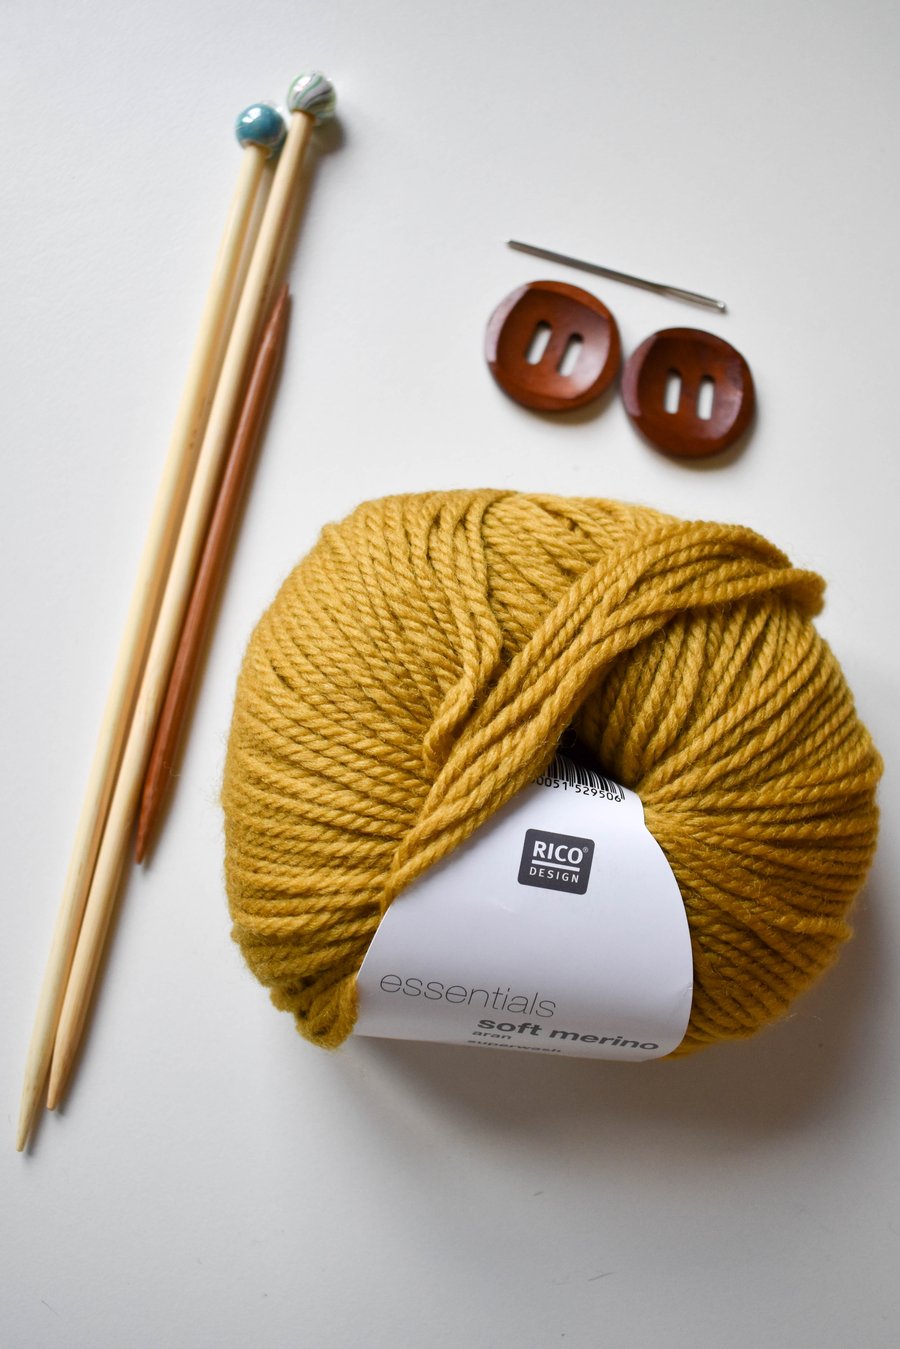 Triple braid headband kit - Knitting, crafts, handmade - saffron yellow